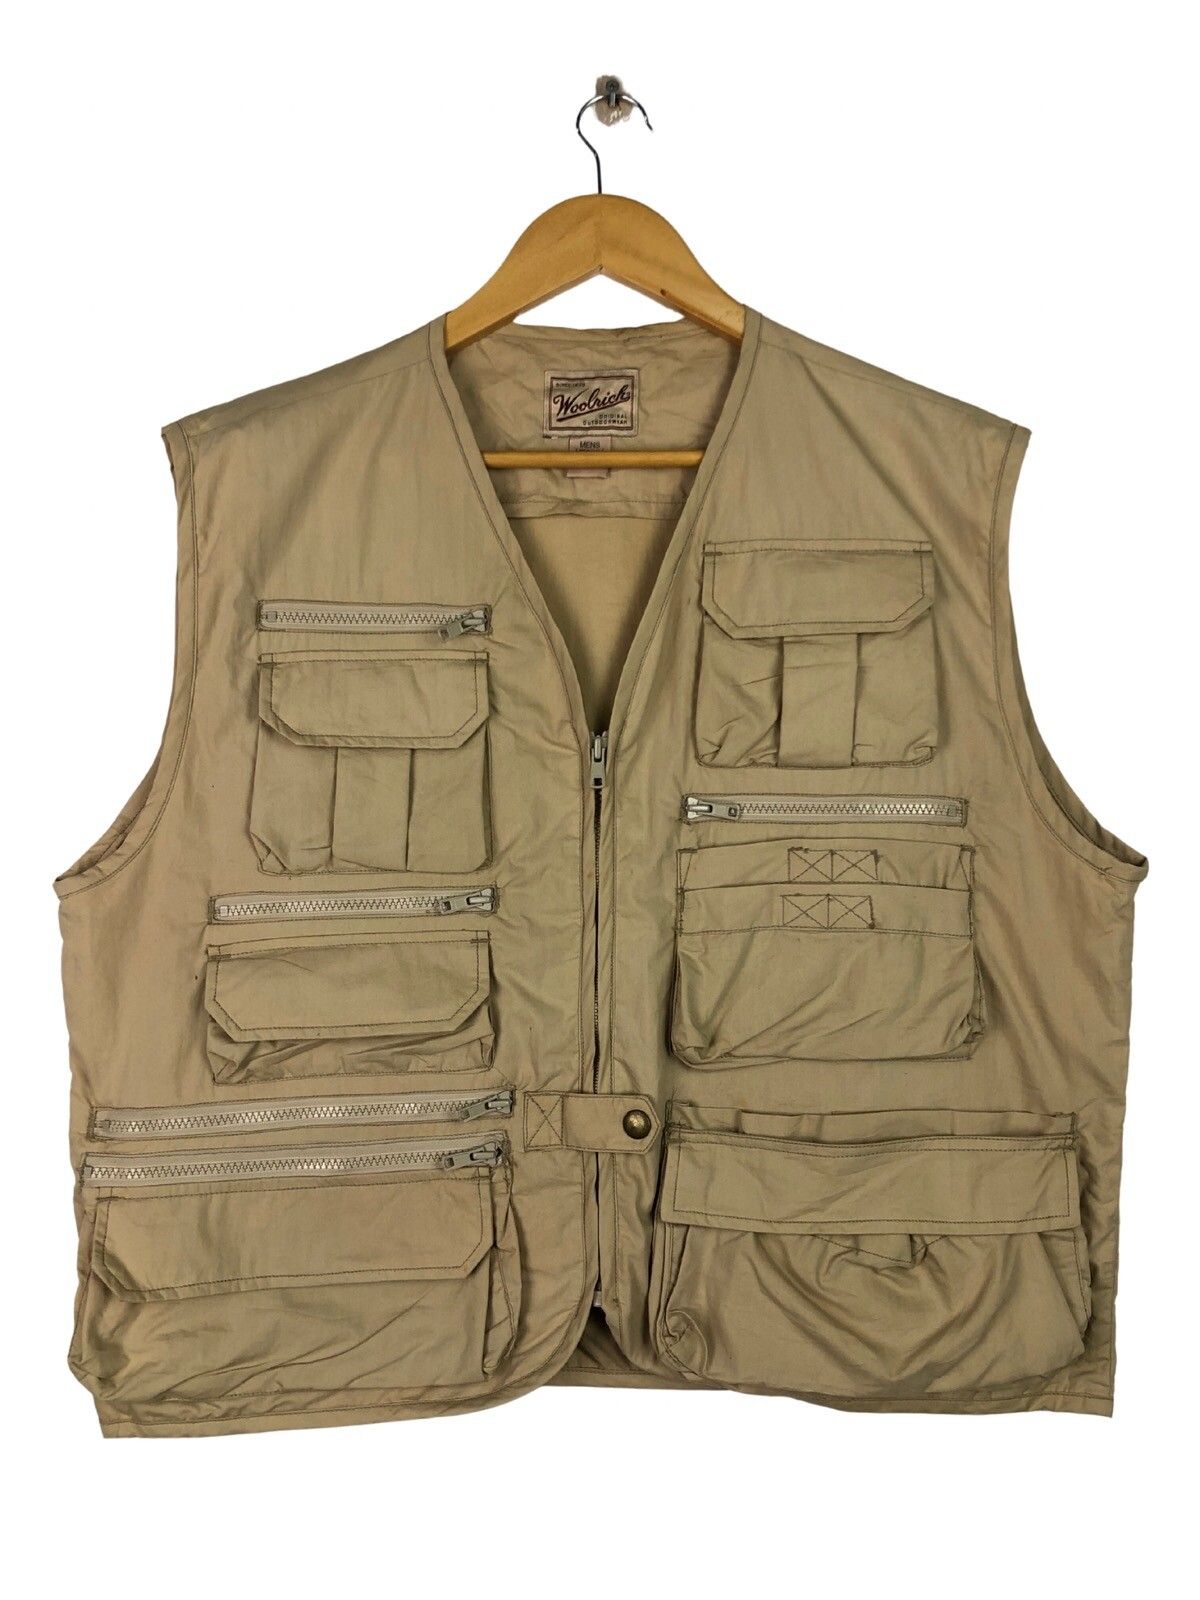 Woolrich Classic Medium Khaki Fishing Vest EXC New Condition